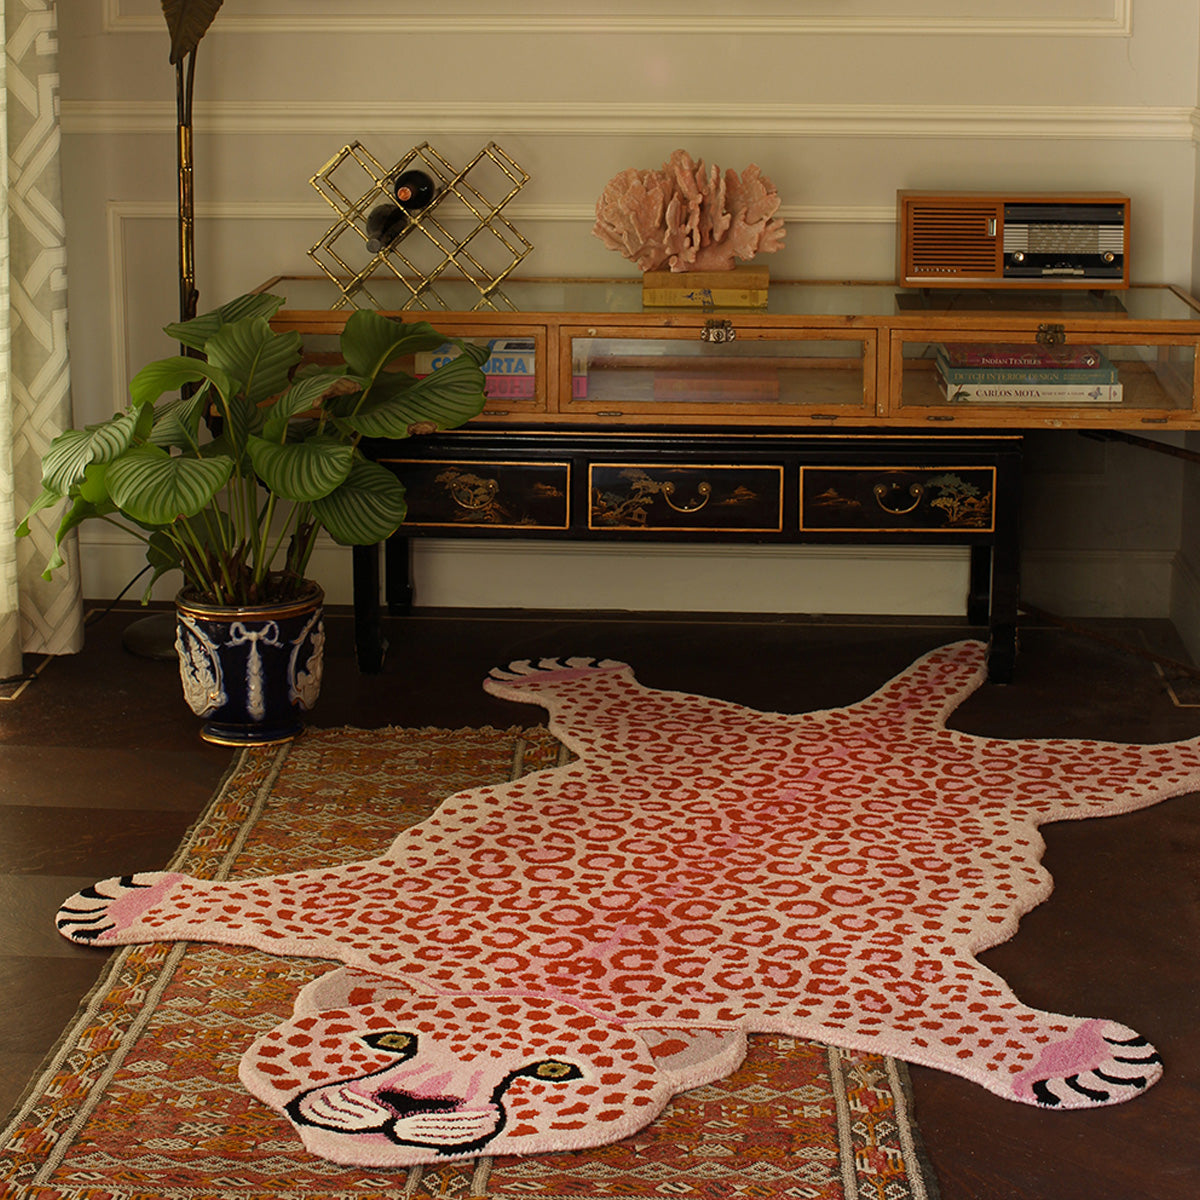 Pinky Leopard Rug XL - Doing Goods